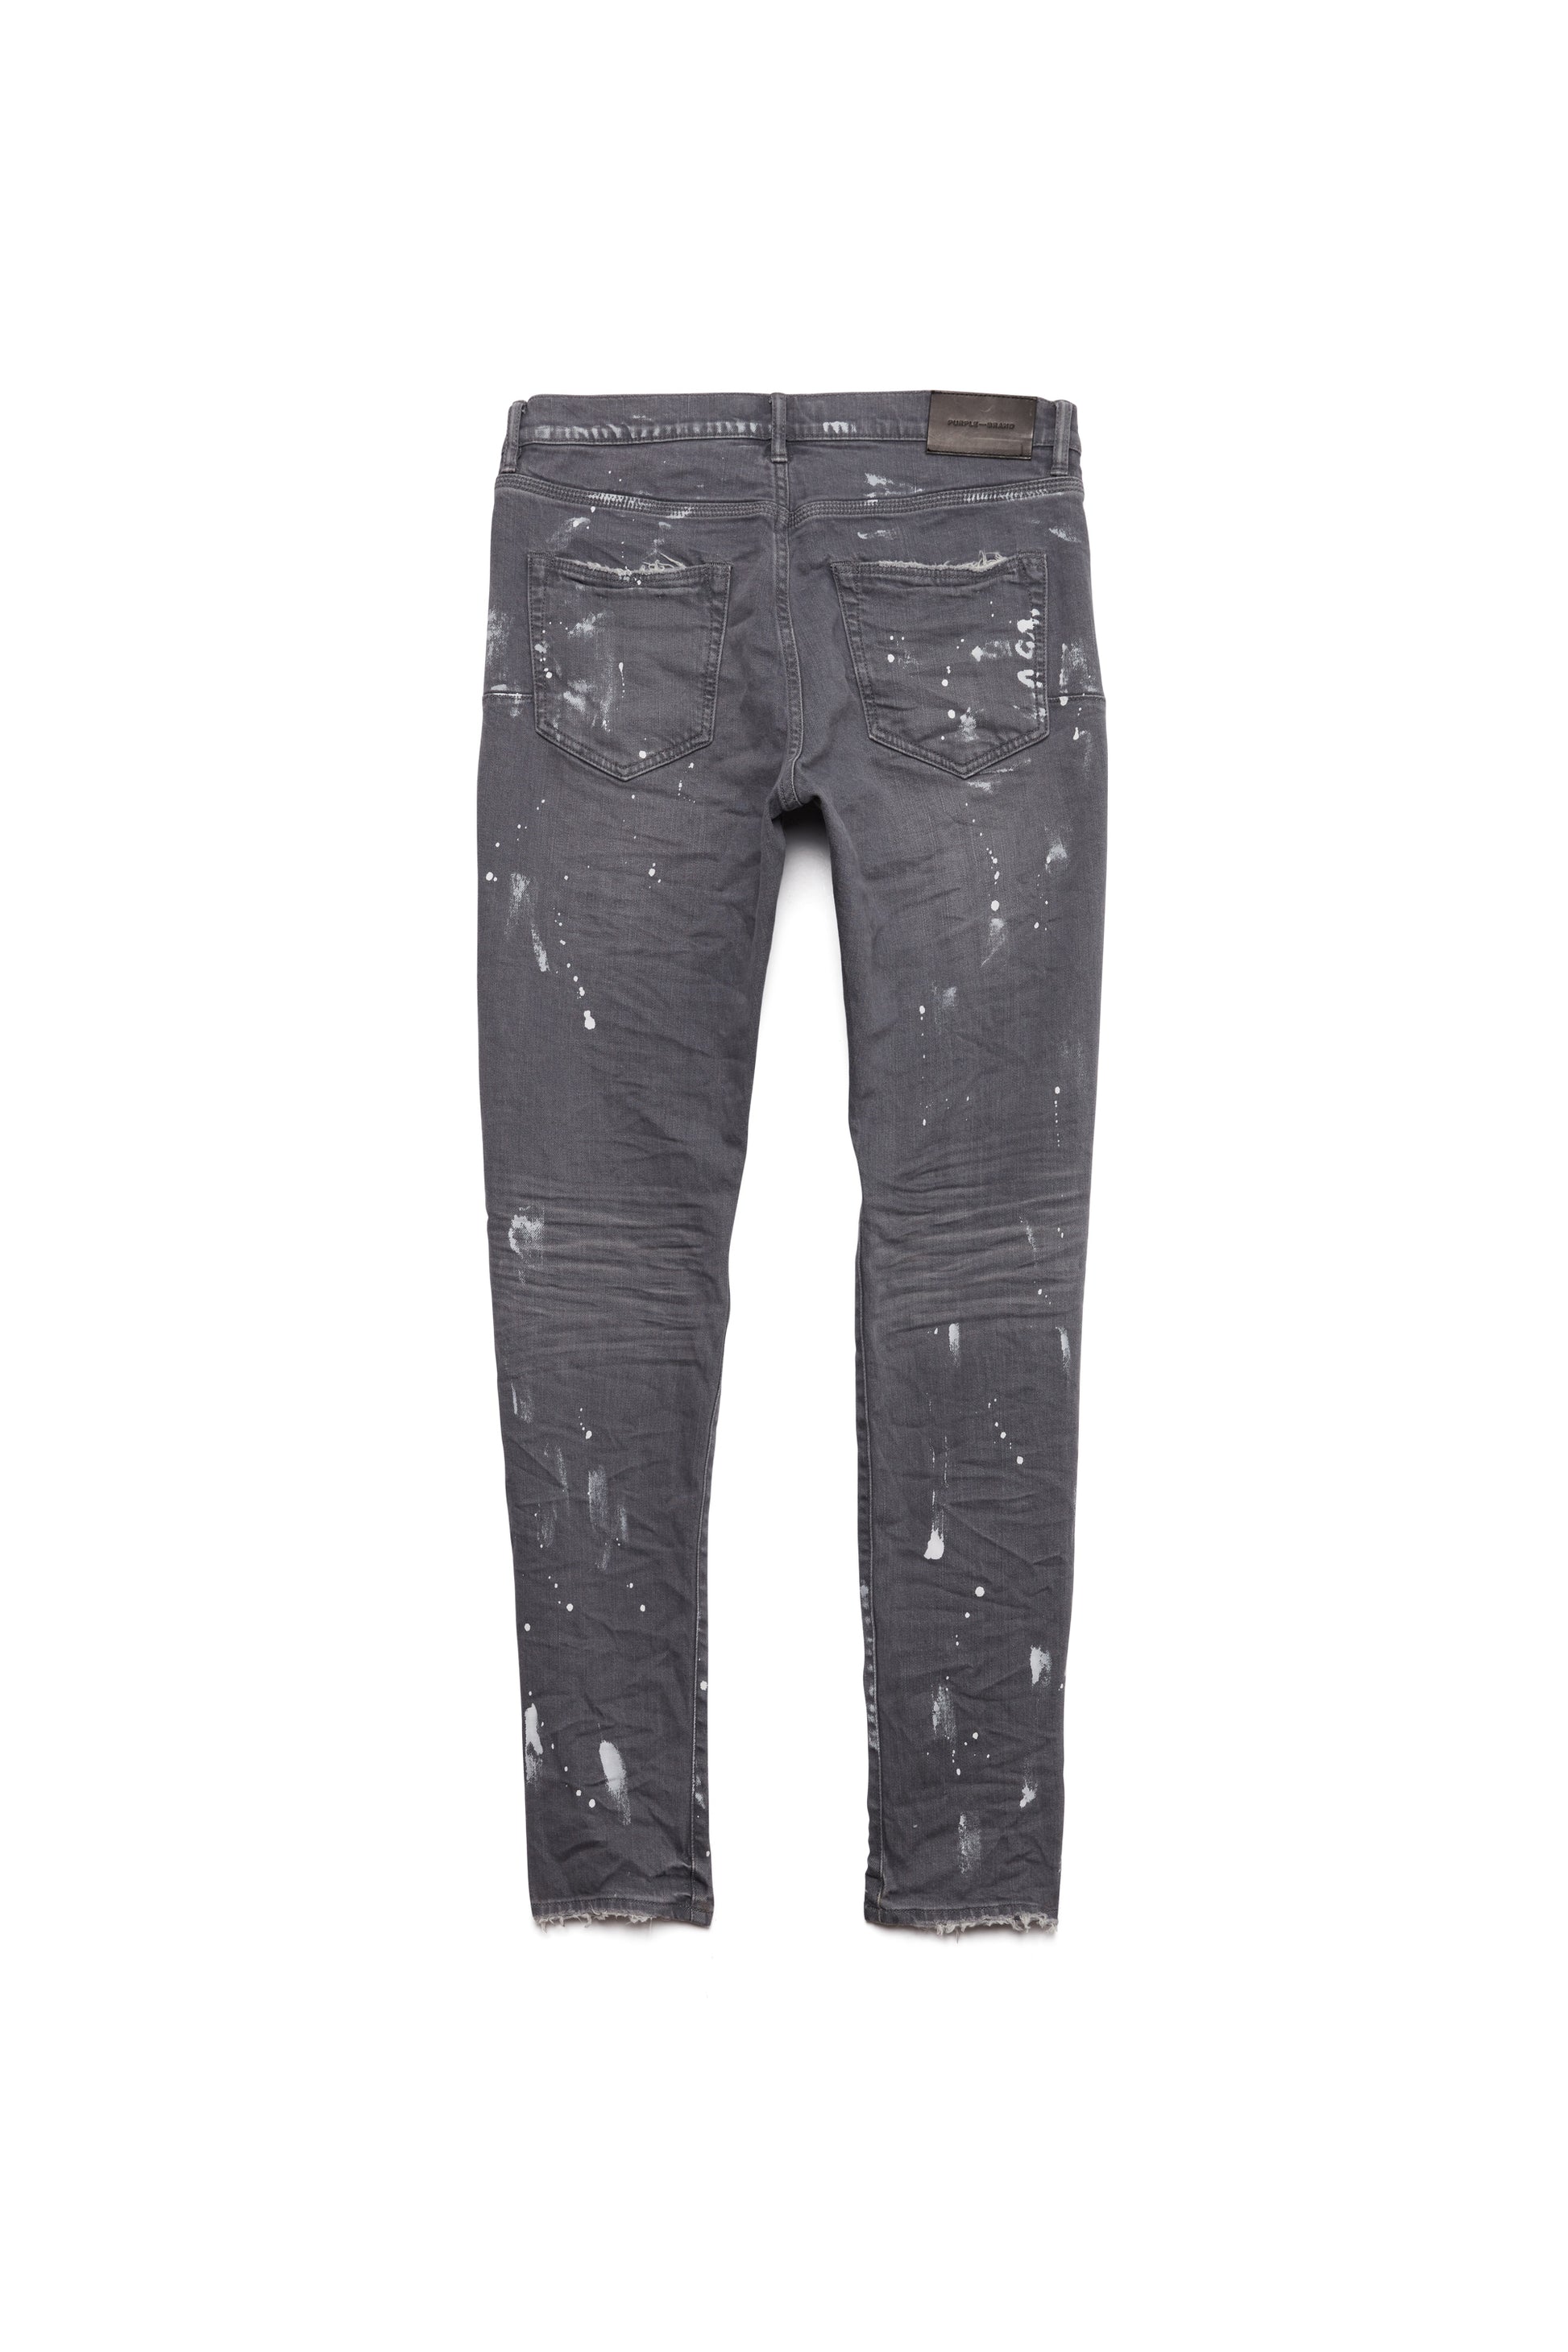 PURPLE BRAND - Men's Denim Jean - Low Rise Skinny - Style No. P001 - Worn Grey Knee Slit - Back